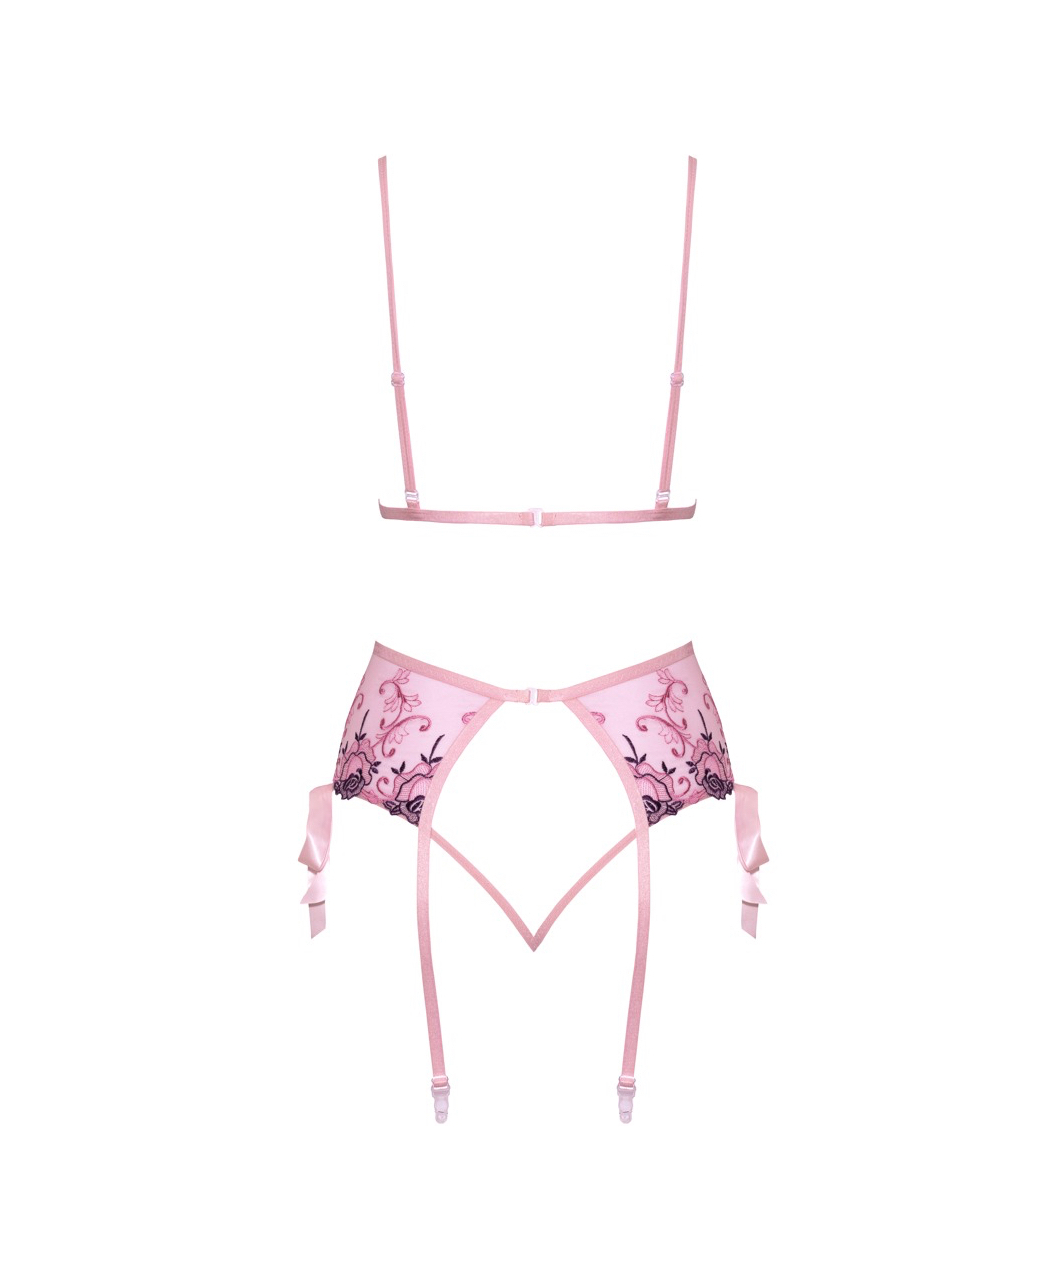 kissable Arose Me pink lingerie set